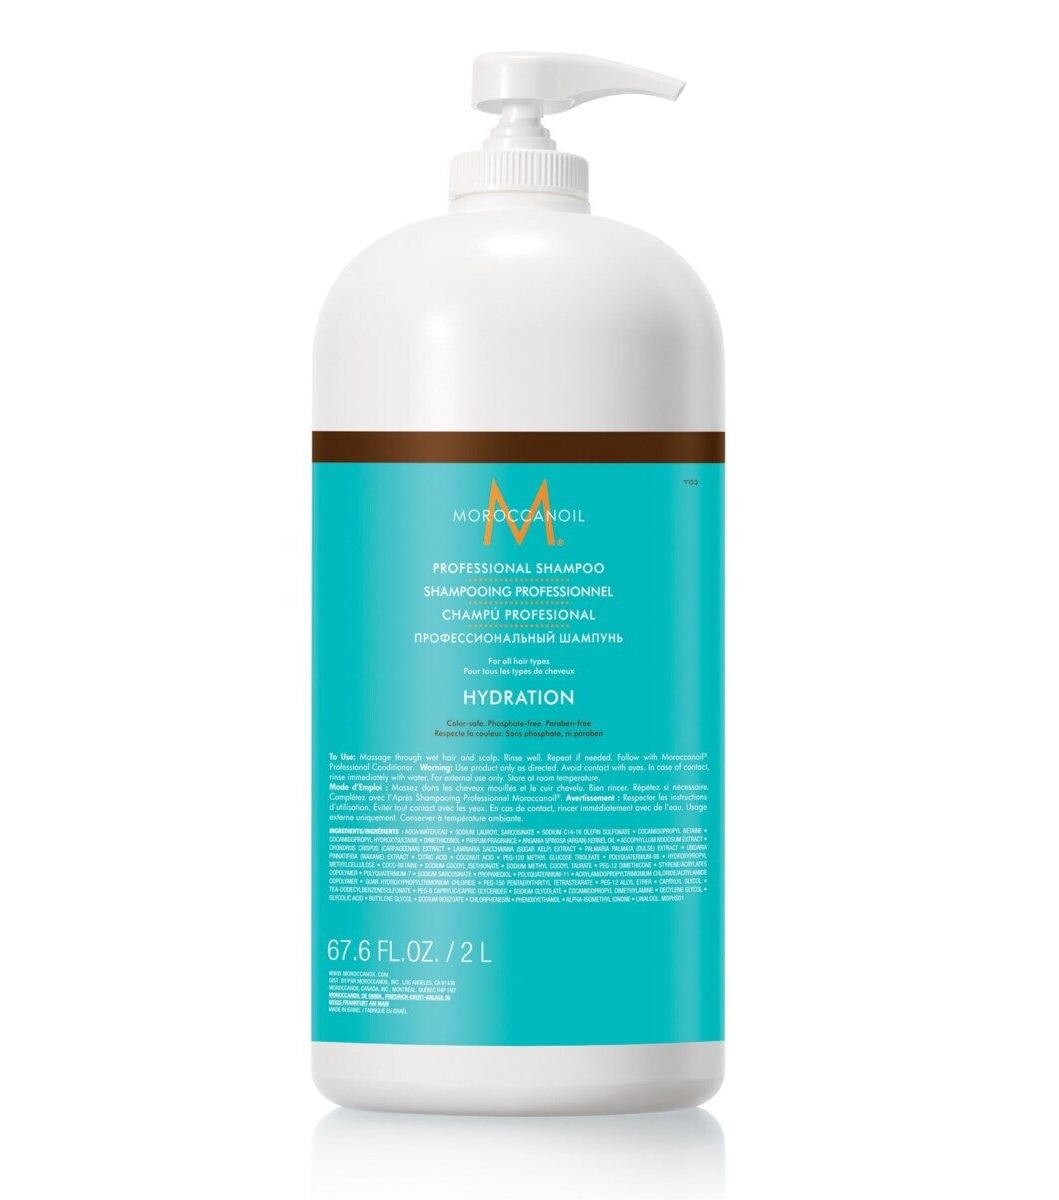 Moroccanoil Hydrating Shampoo, 67.6 fl oz - $85.00